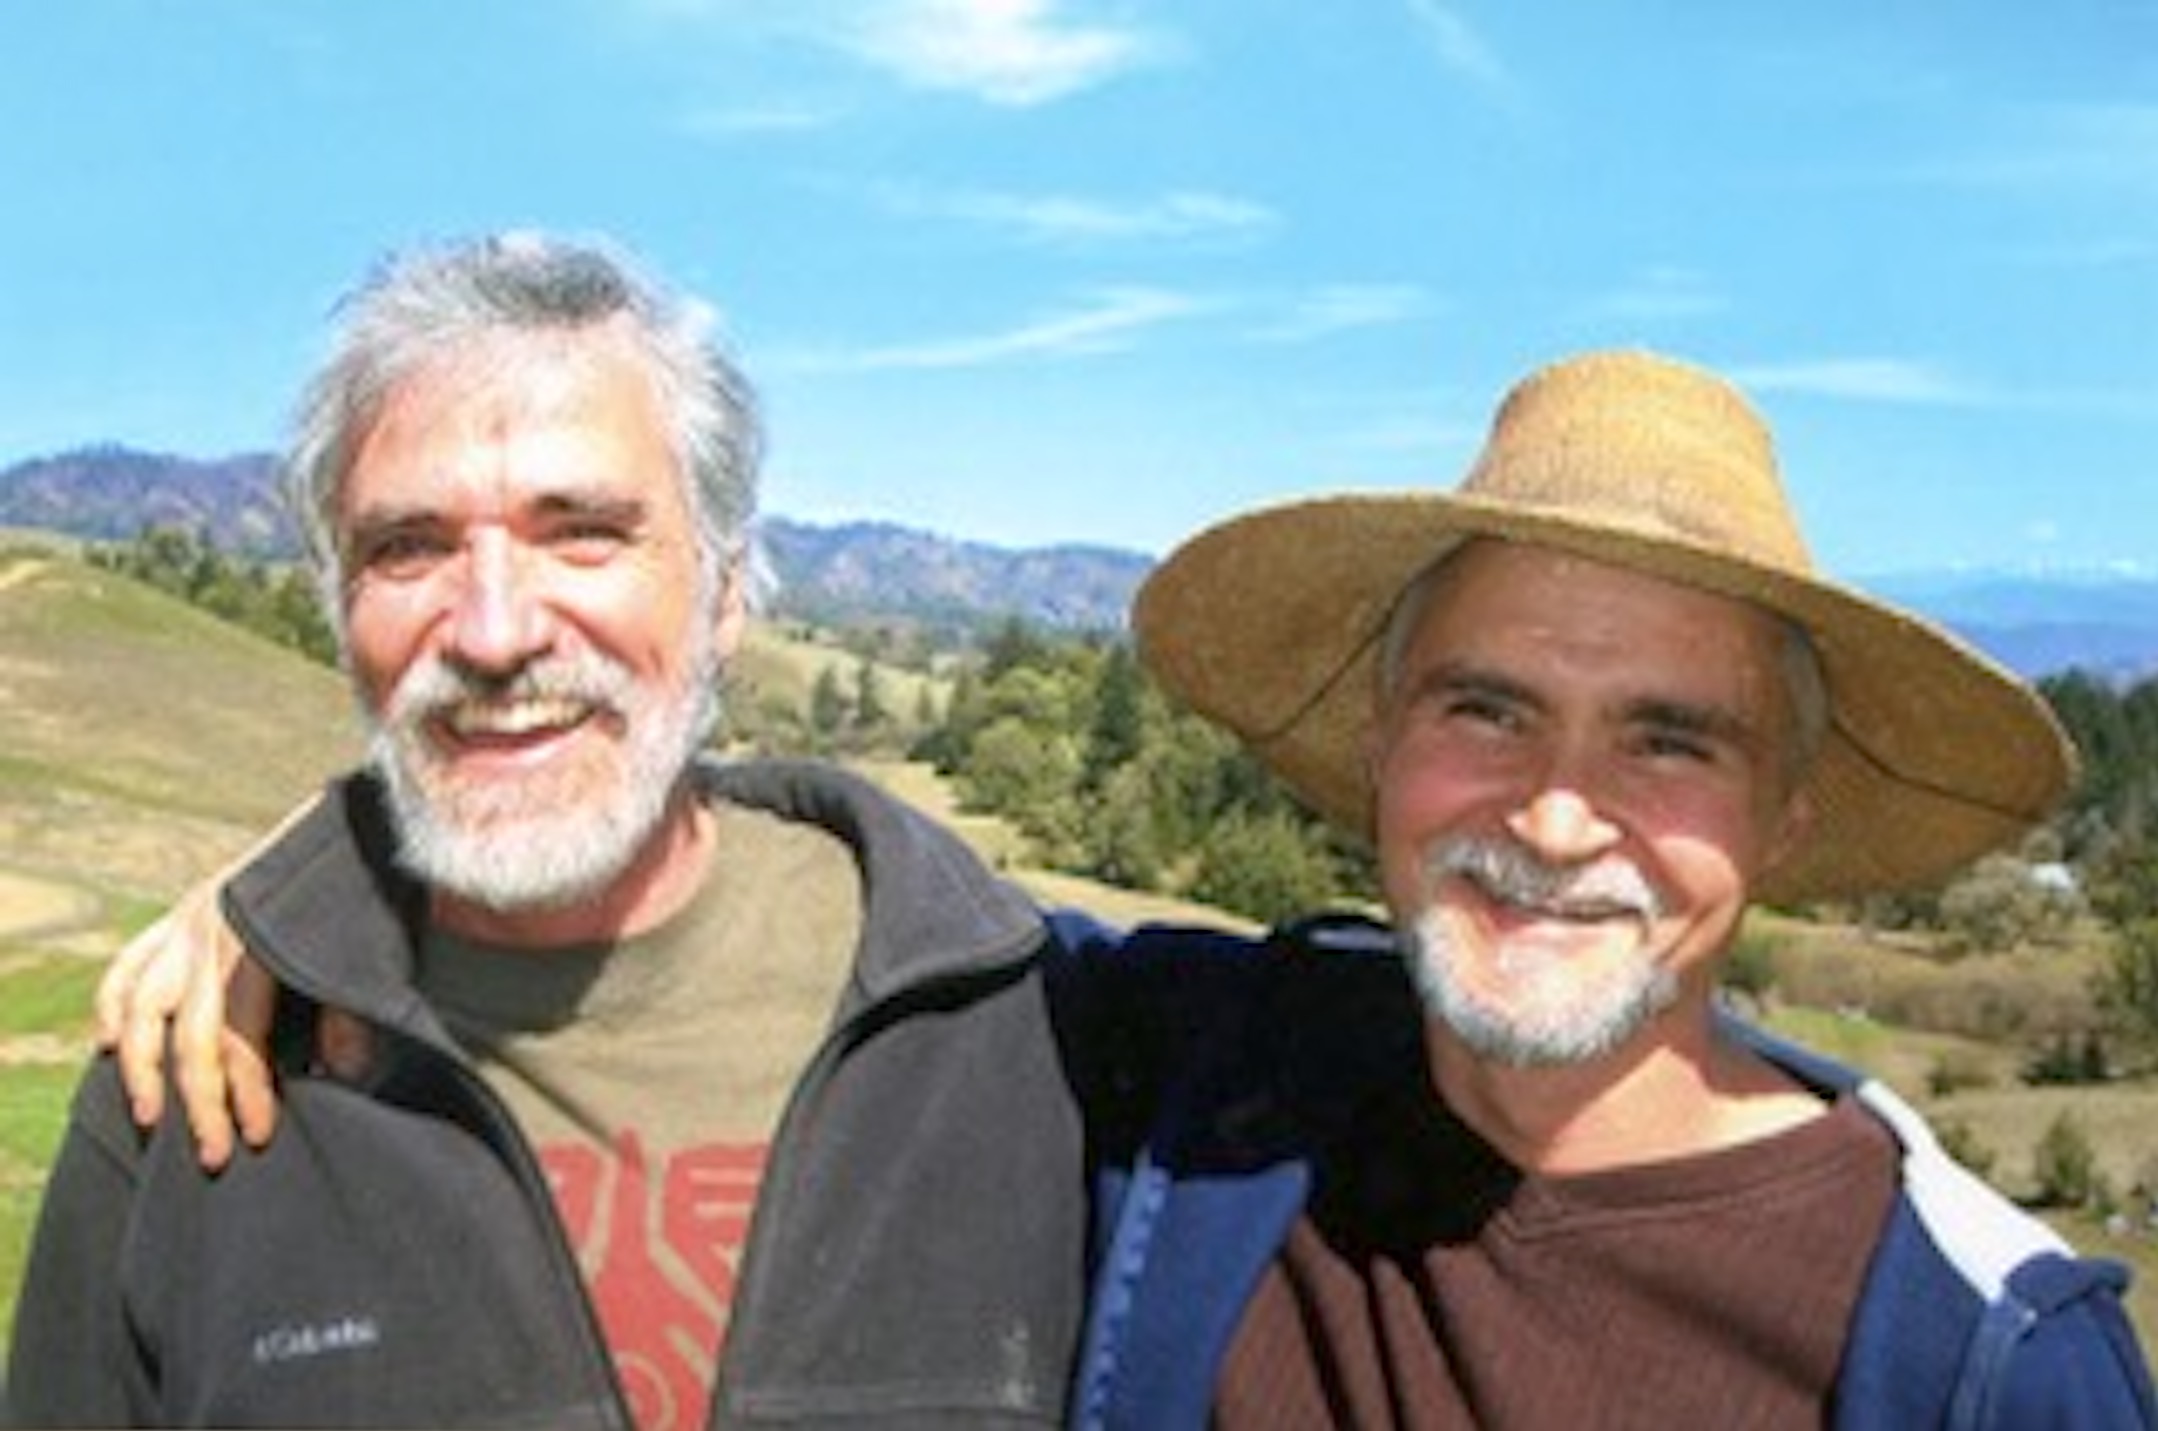 Ron Vanscoyk and his husband Scott Love on their land.